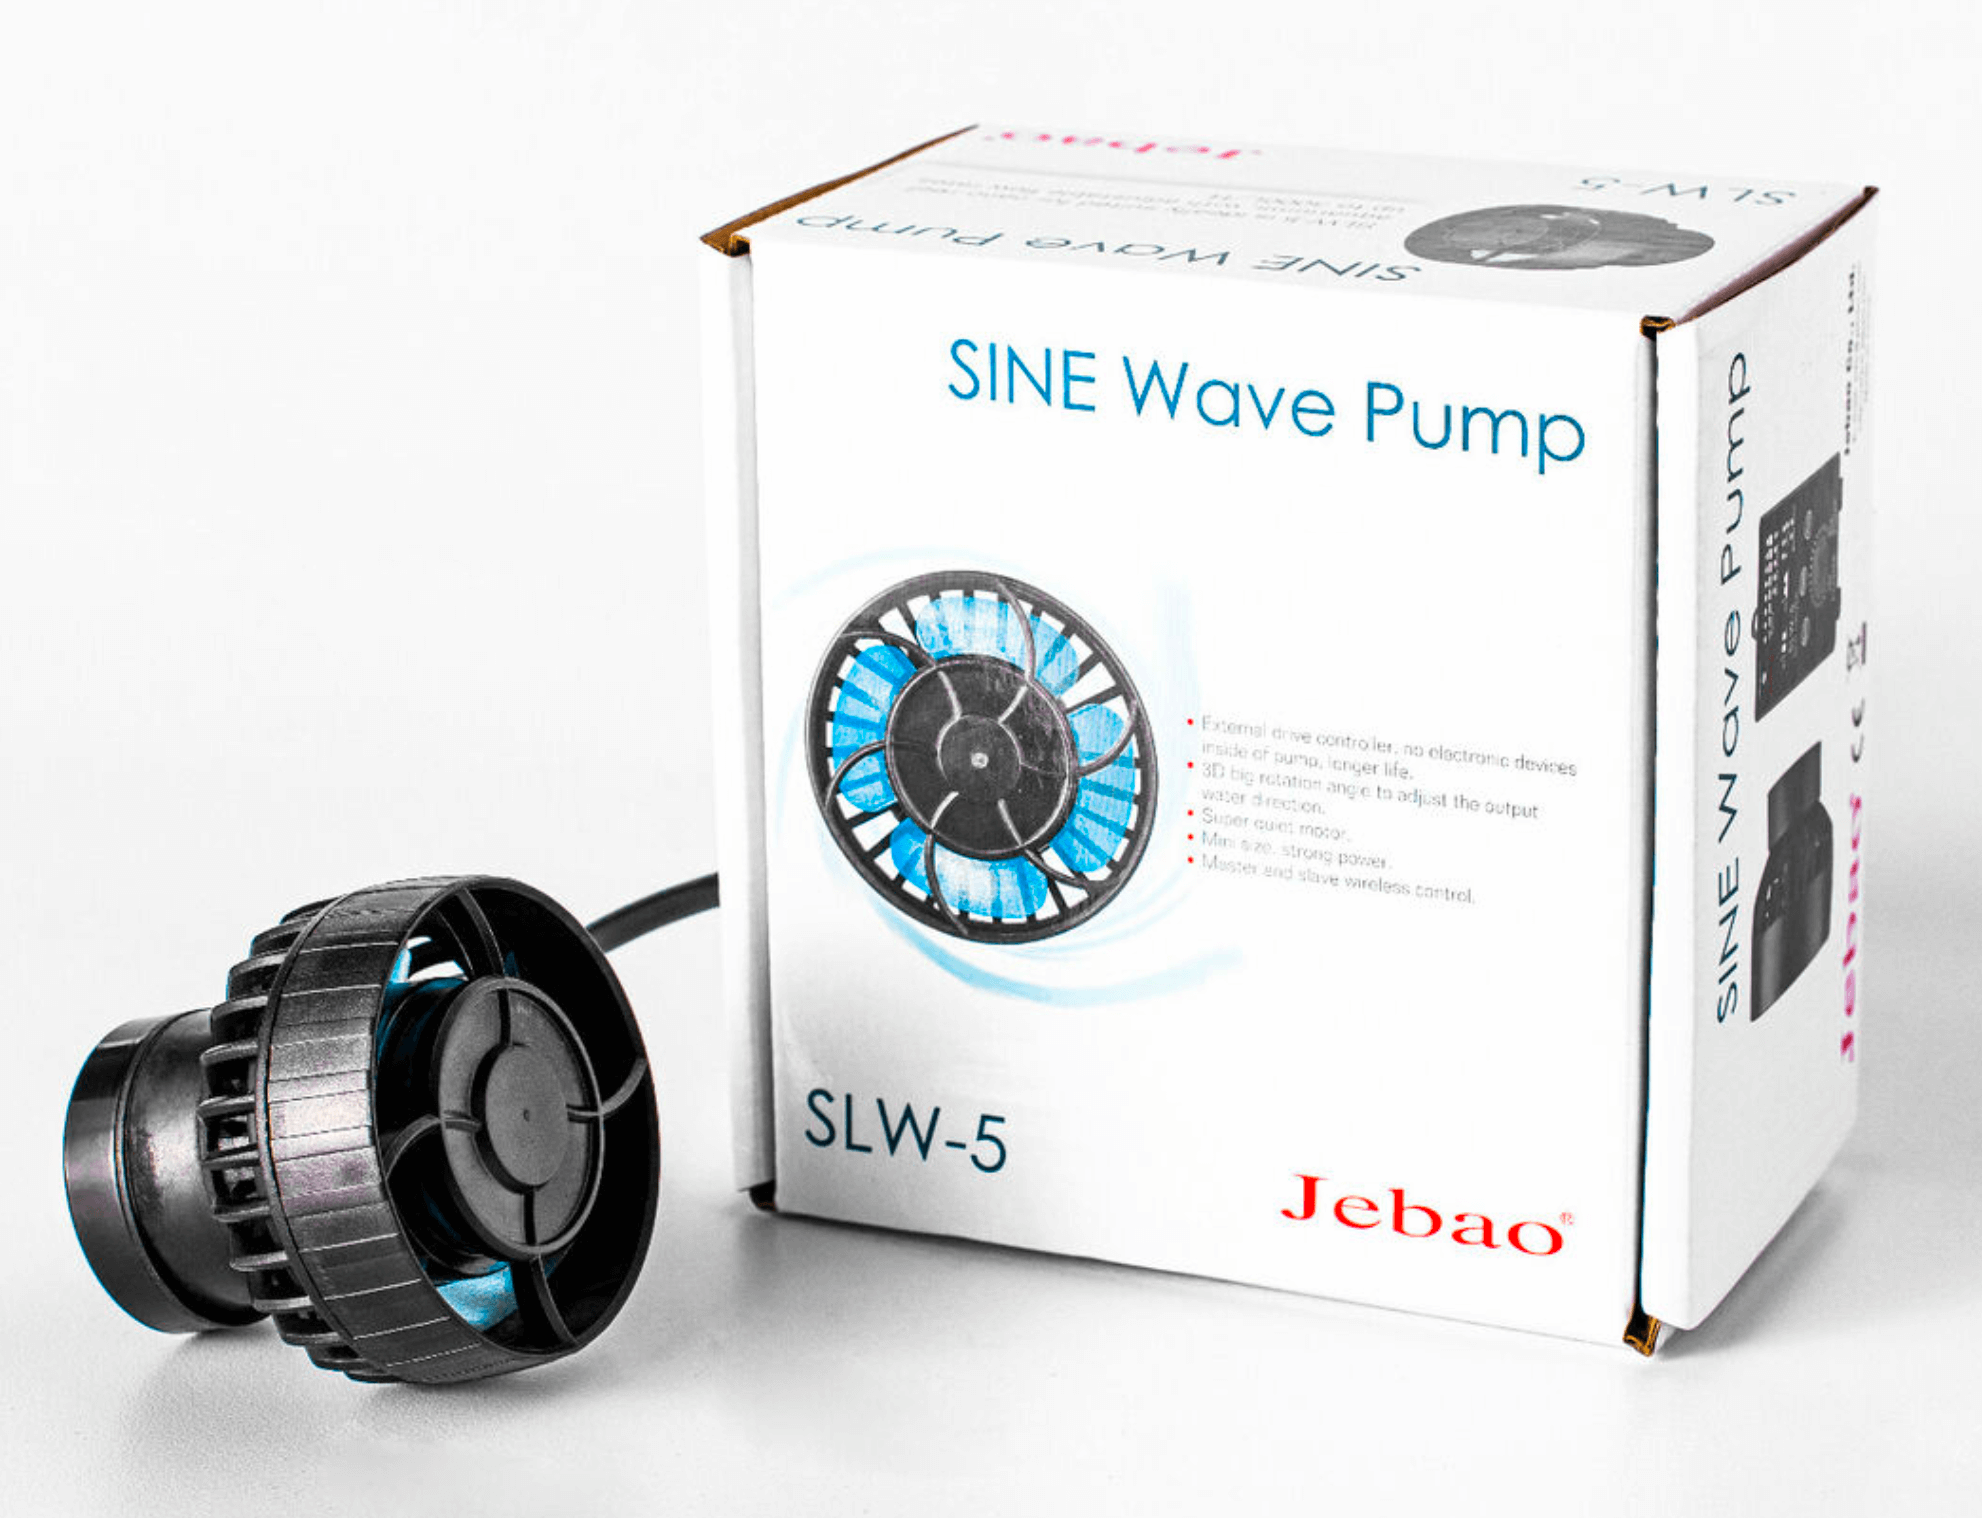 Jecod/Jebao SLW-5 stromingspompen (sine wave)